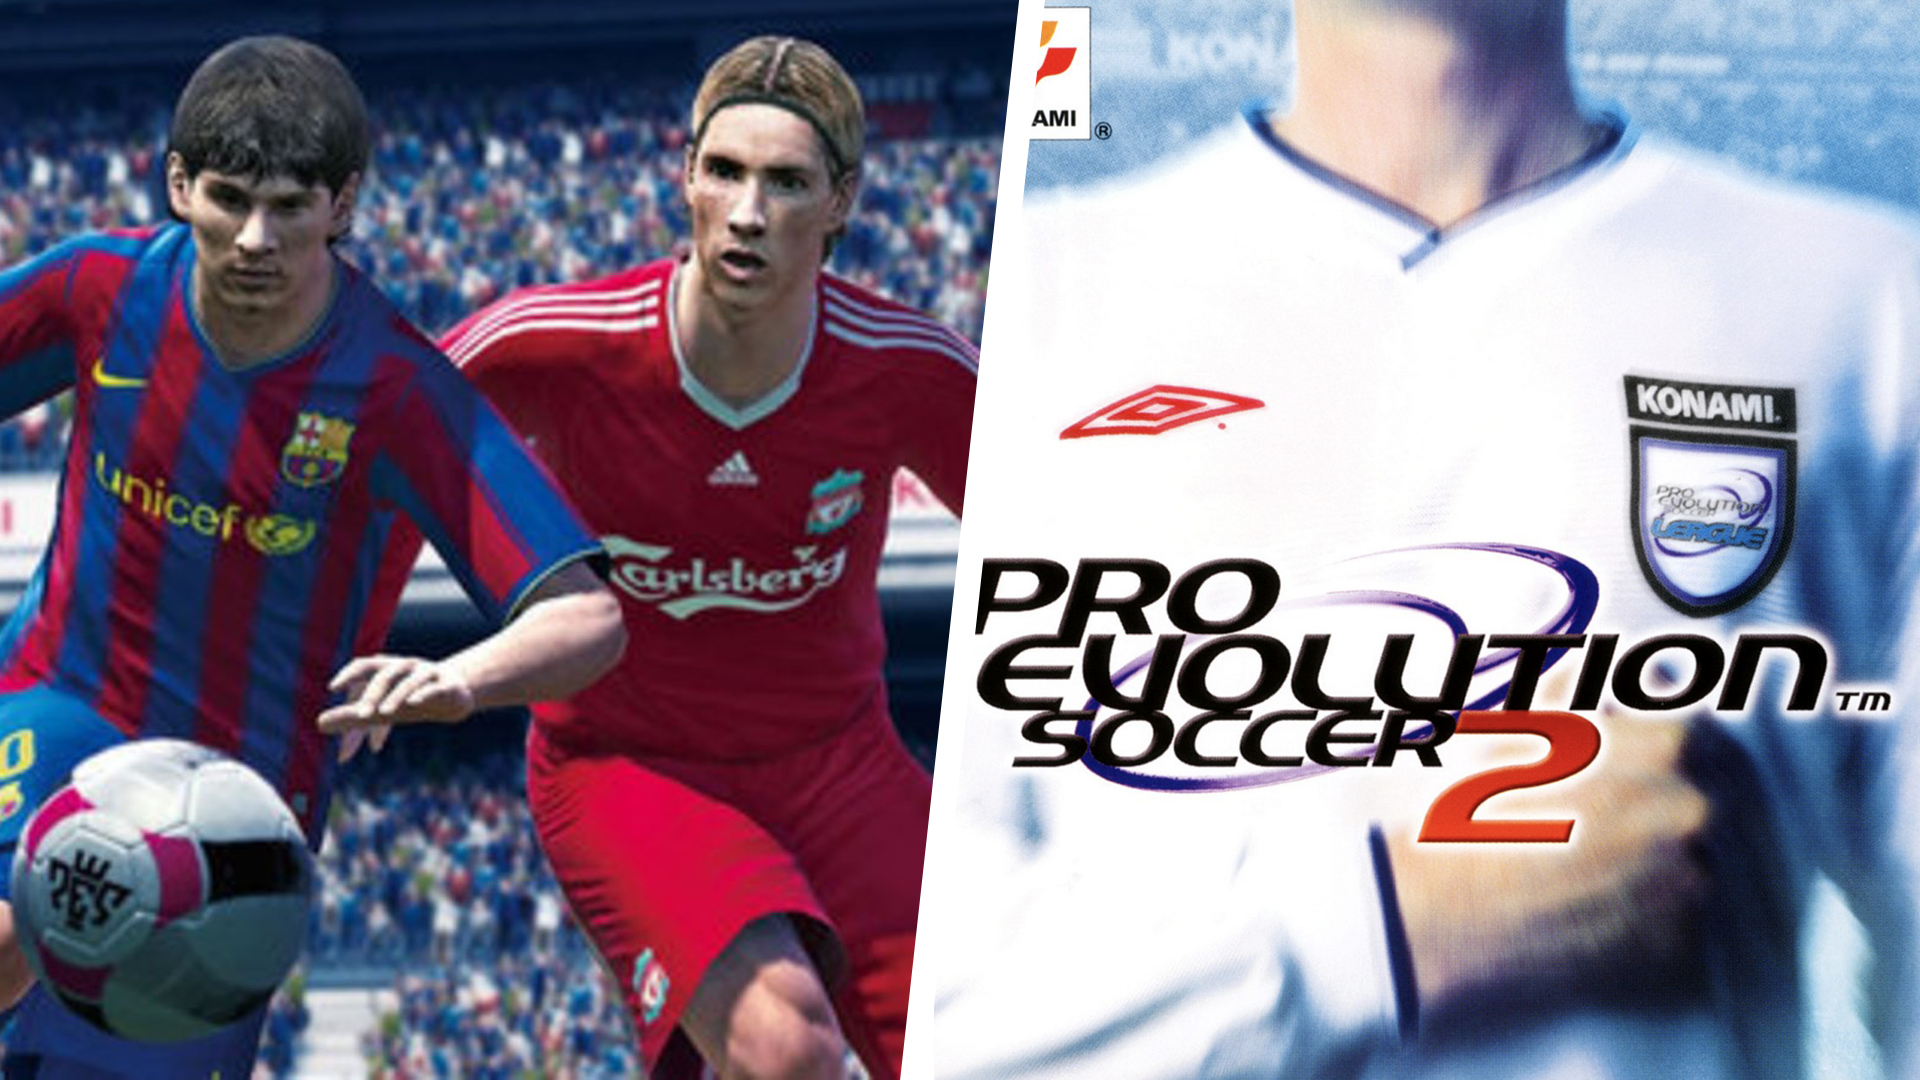 PES 2018 - Pro Evolution Soccer, OT, Man Blue vs Man Red for the KONAMI Cup